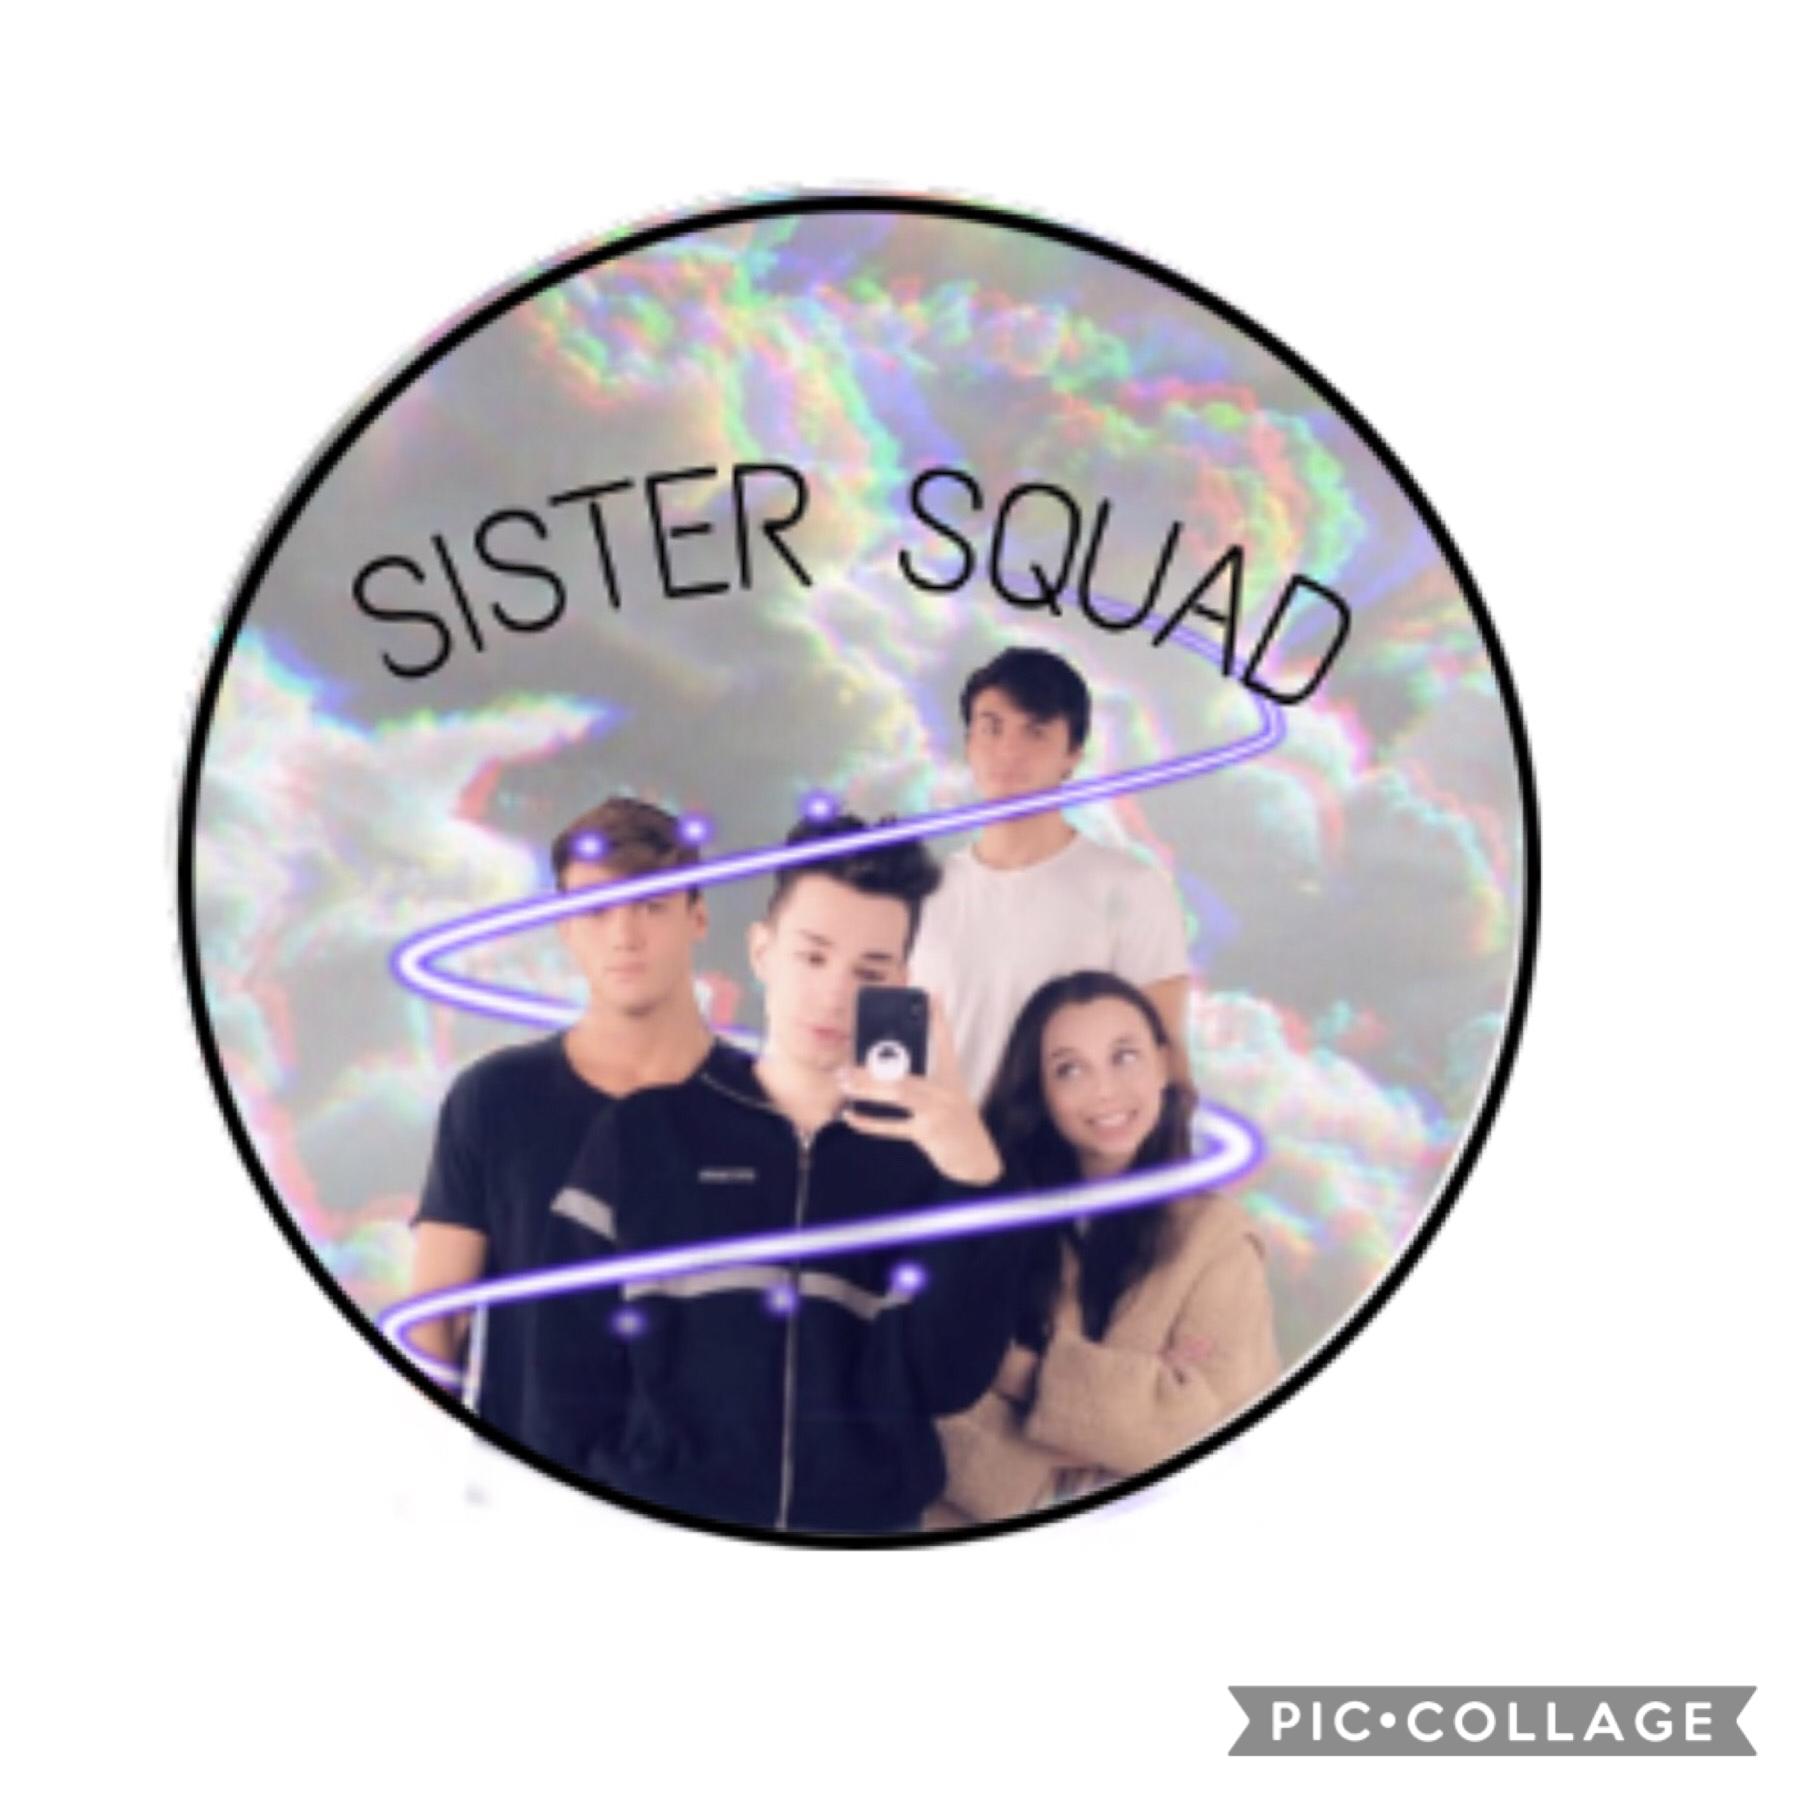 Sister Squad!